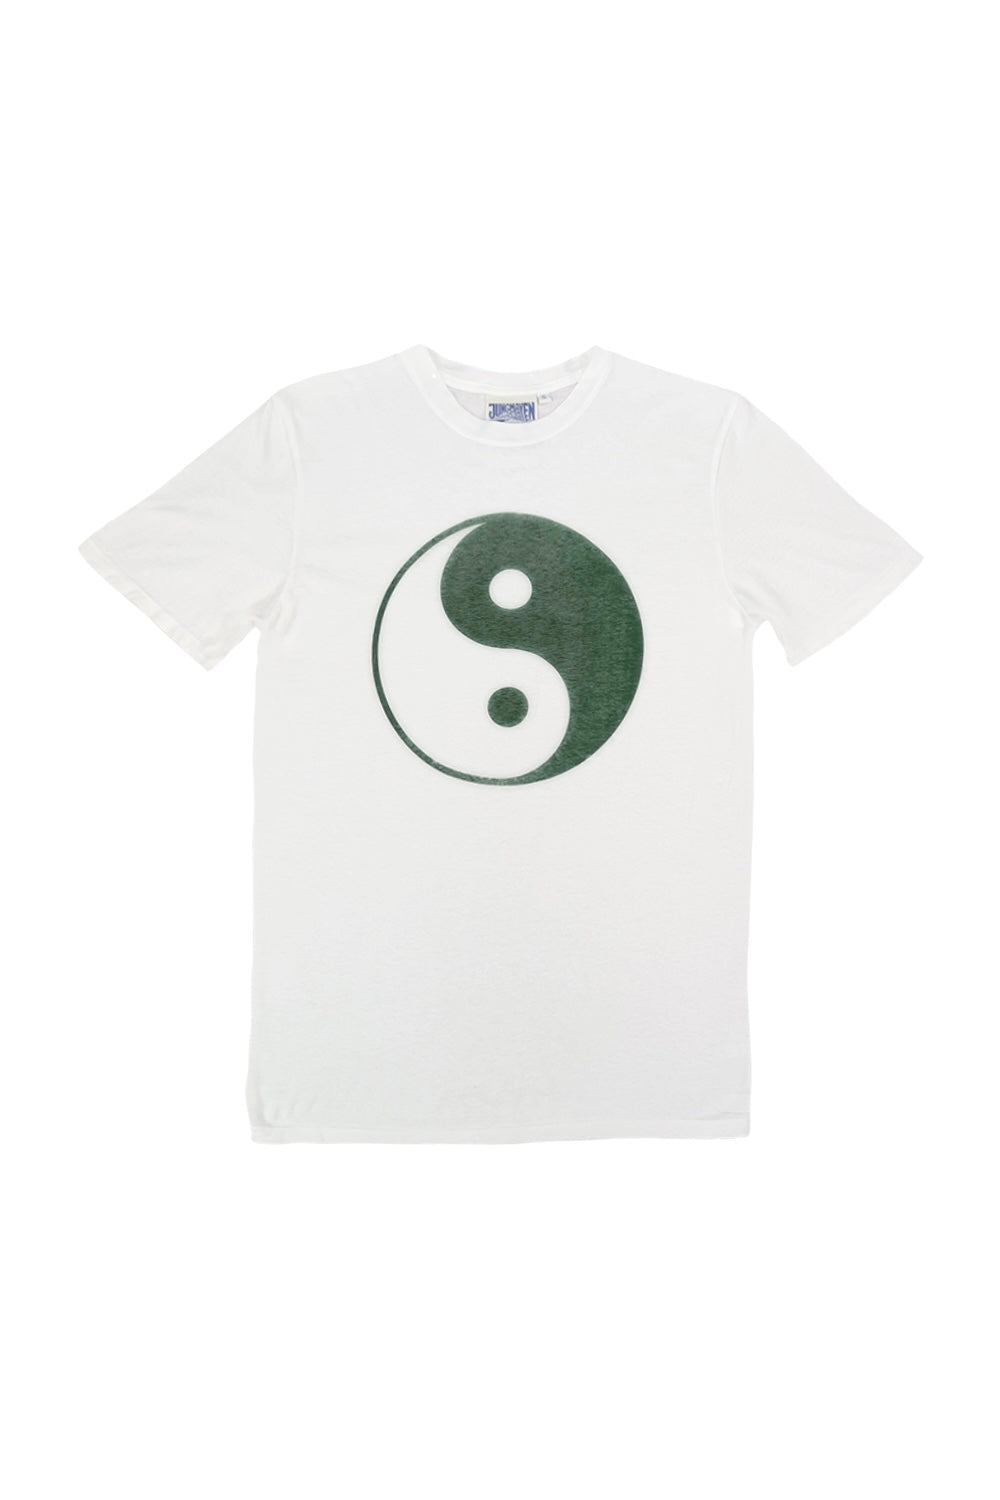 Yin Yang Basic Tee | Jungmaven Hemp Clothing & Accessories / Color: Hunter Green